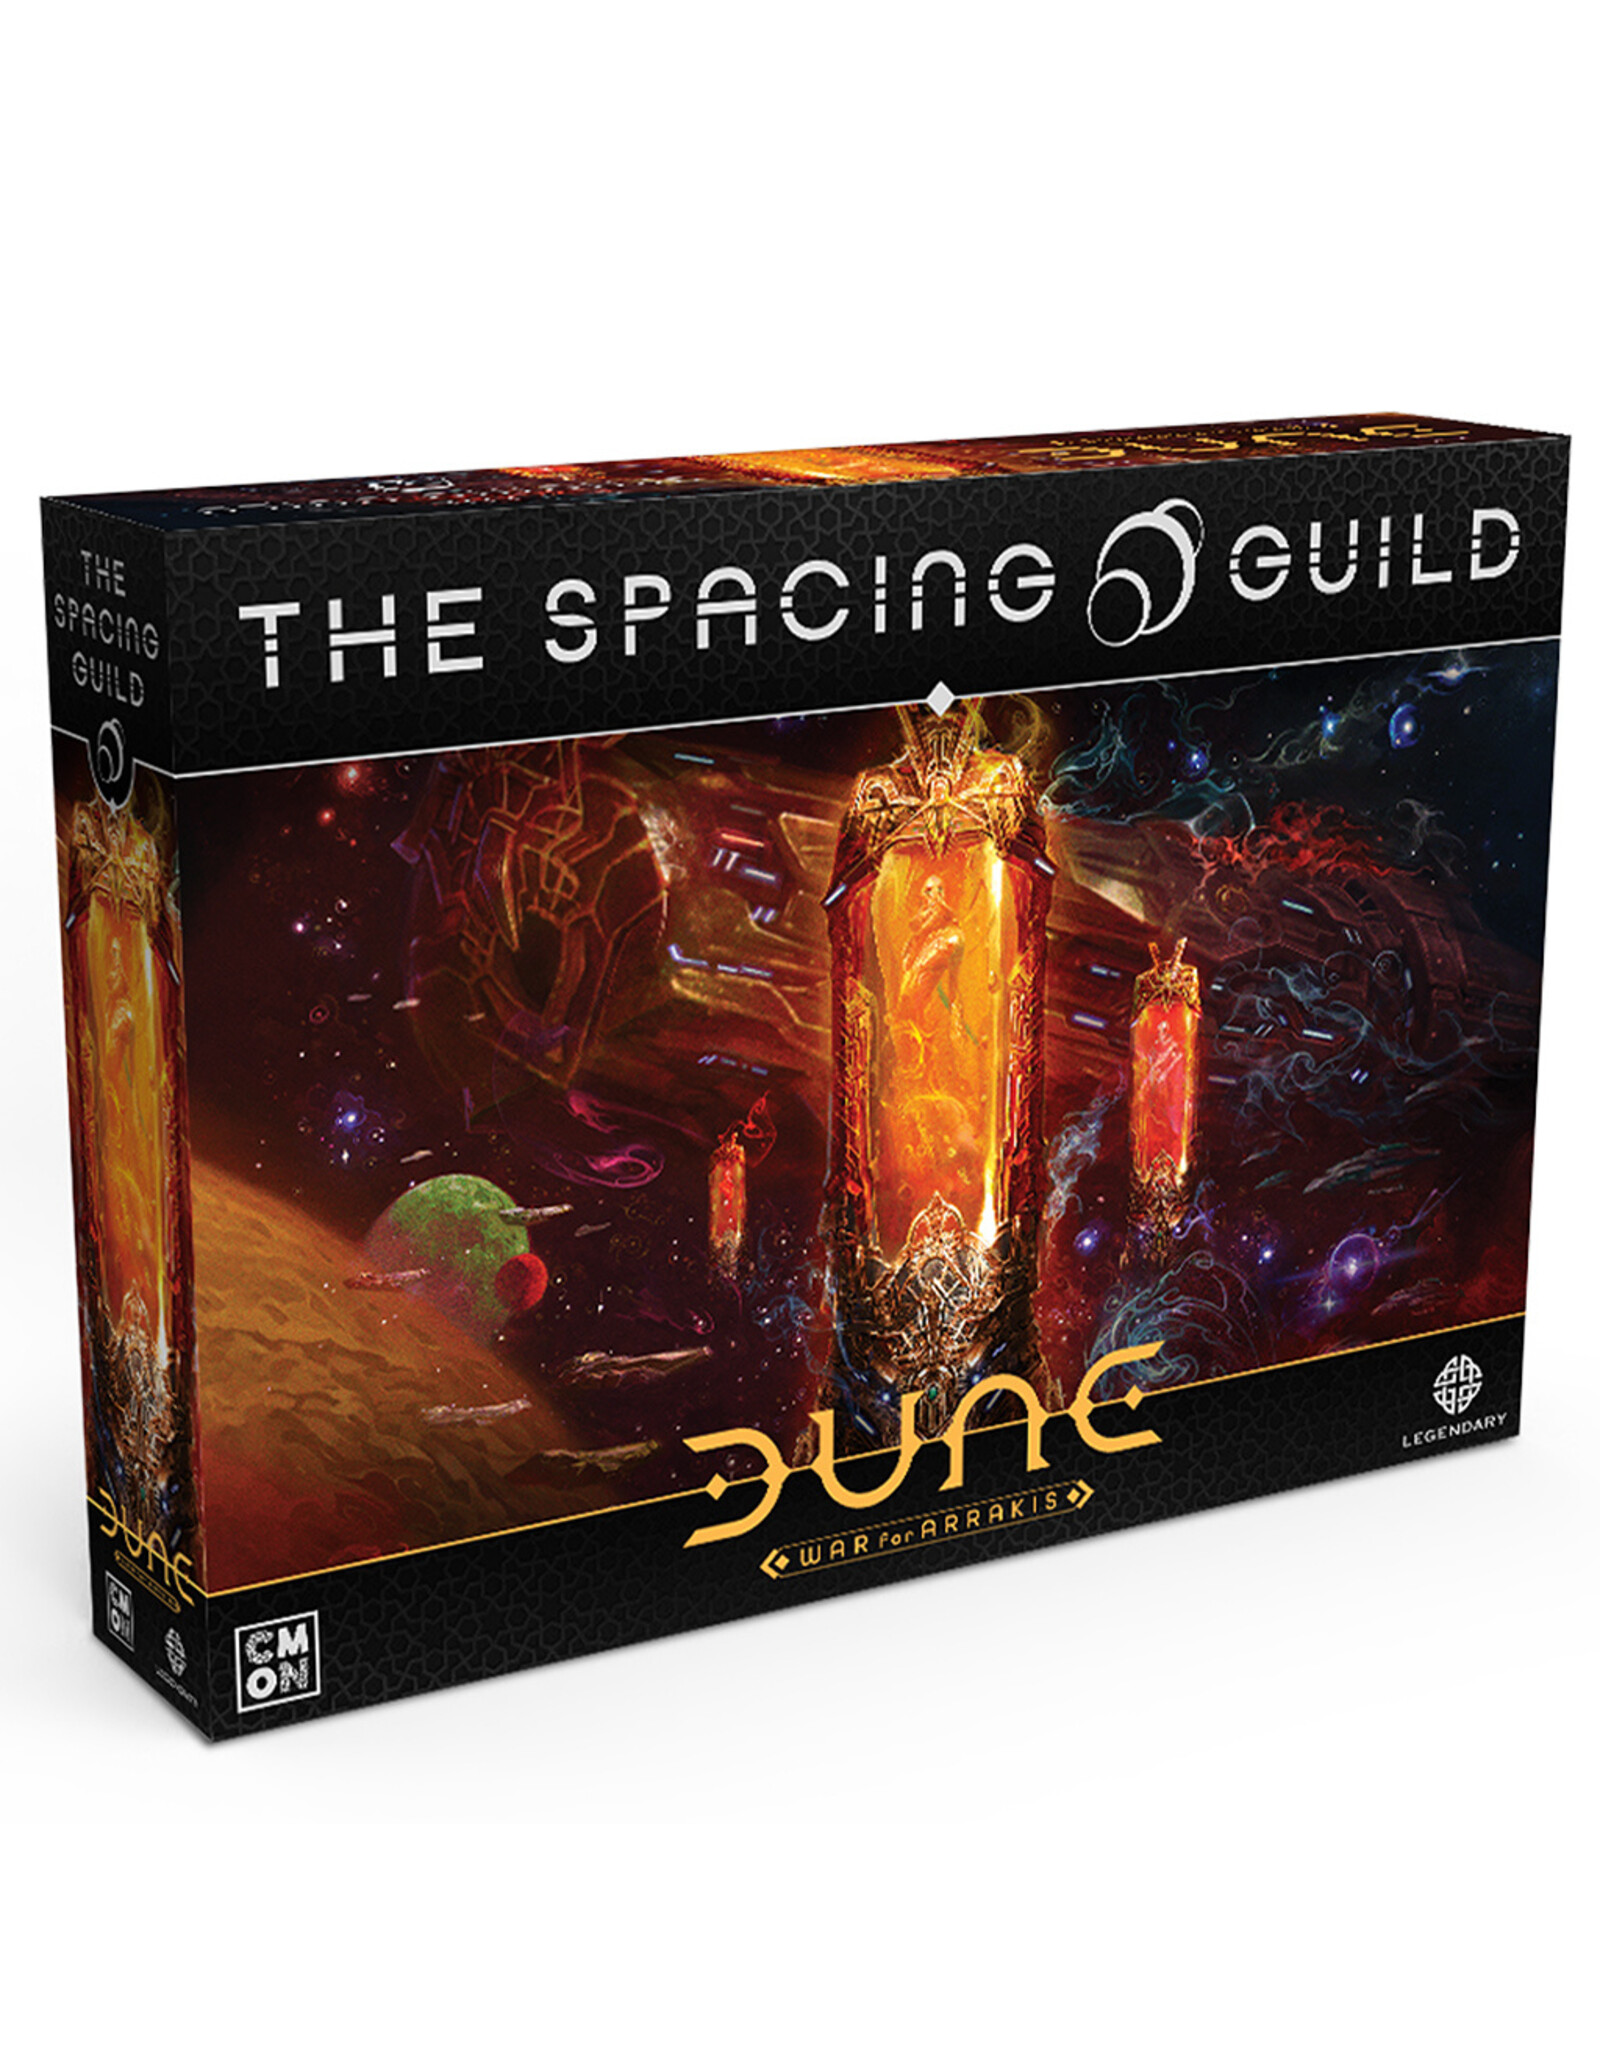 Cool Mini or Not Dune: War of Arrakis: The Spacing Guild